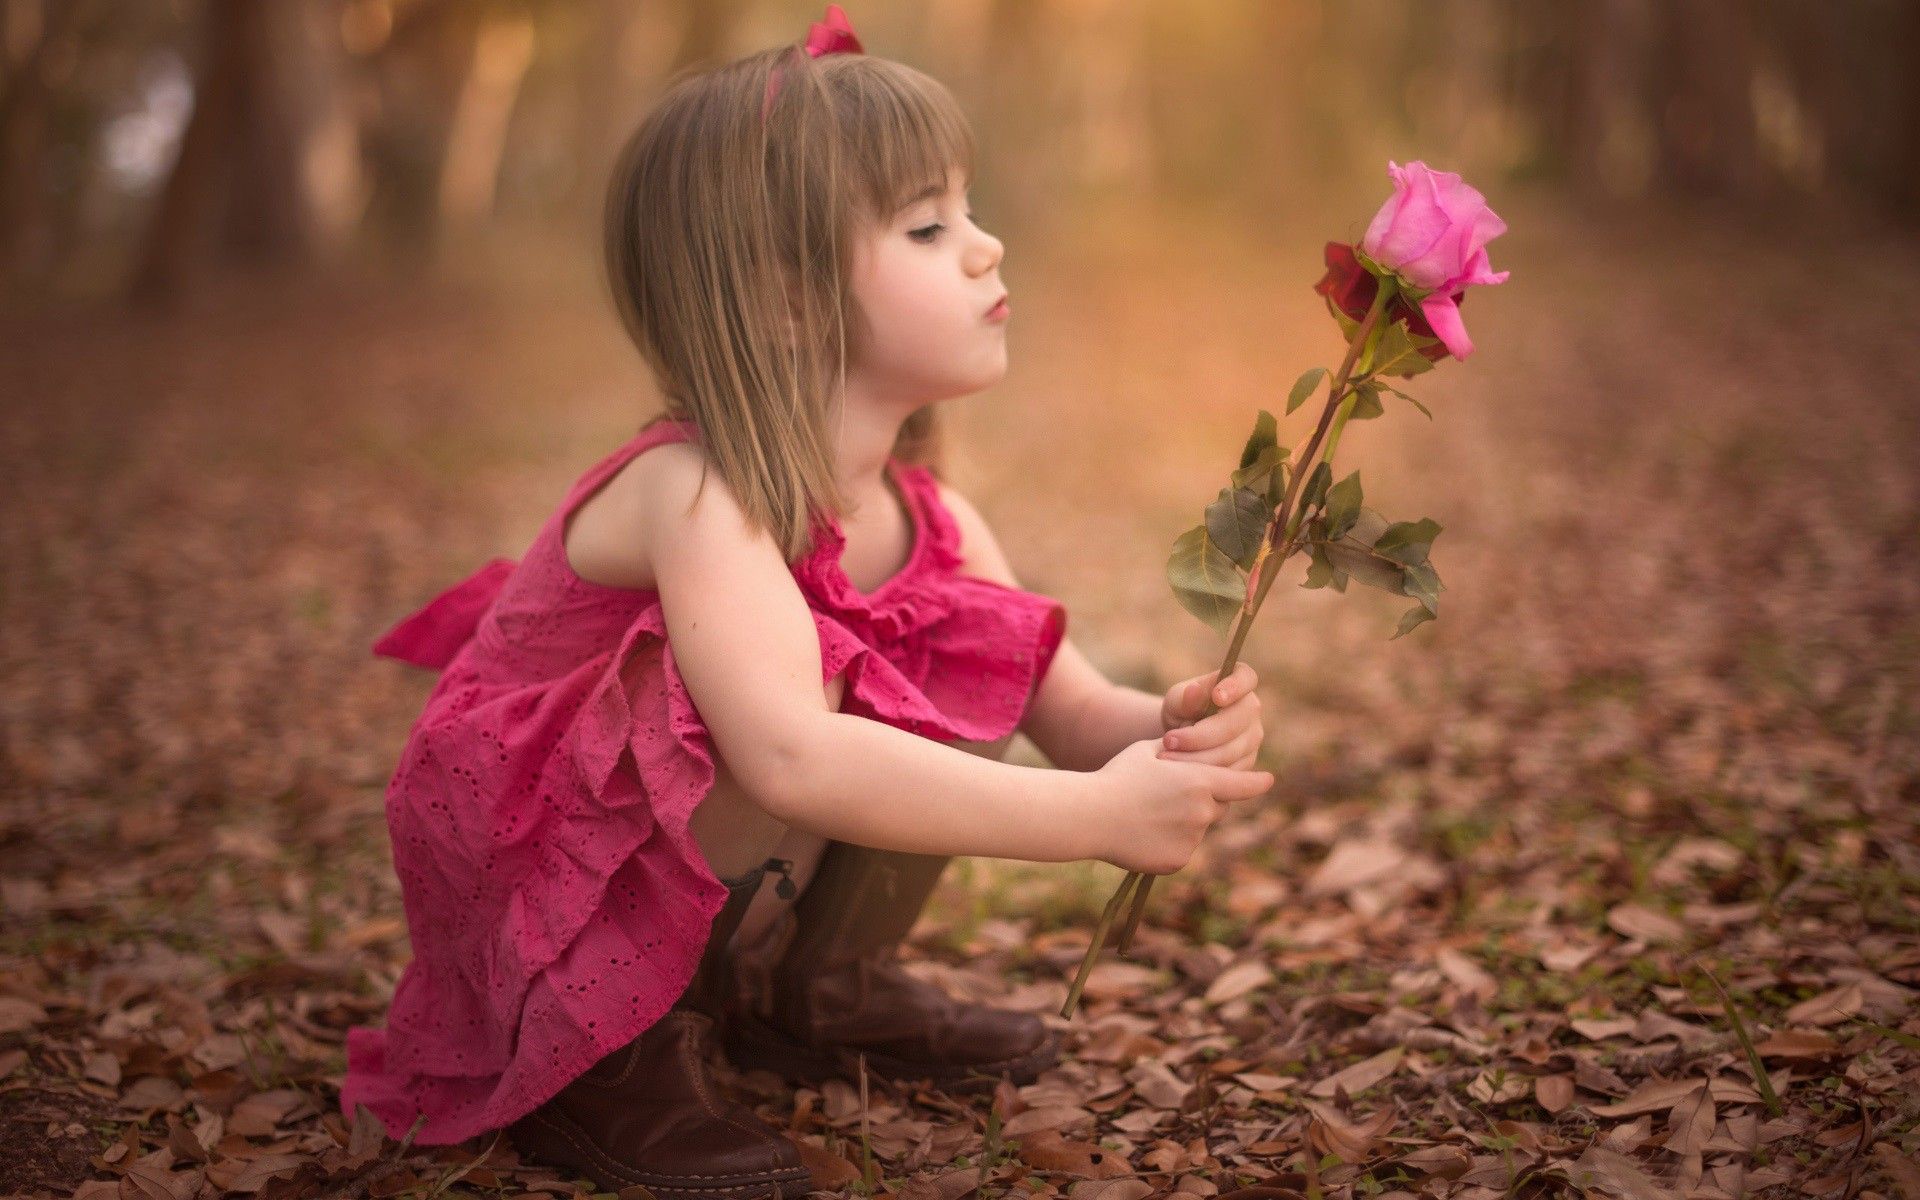 Cute Little Baby Girl With Flowers | Meadow girls | Pinterest ...